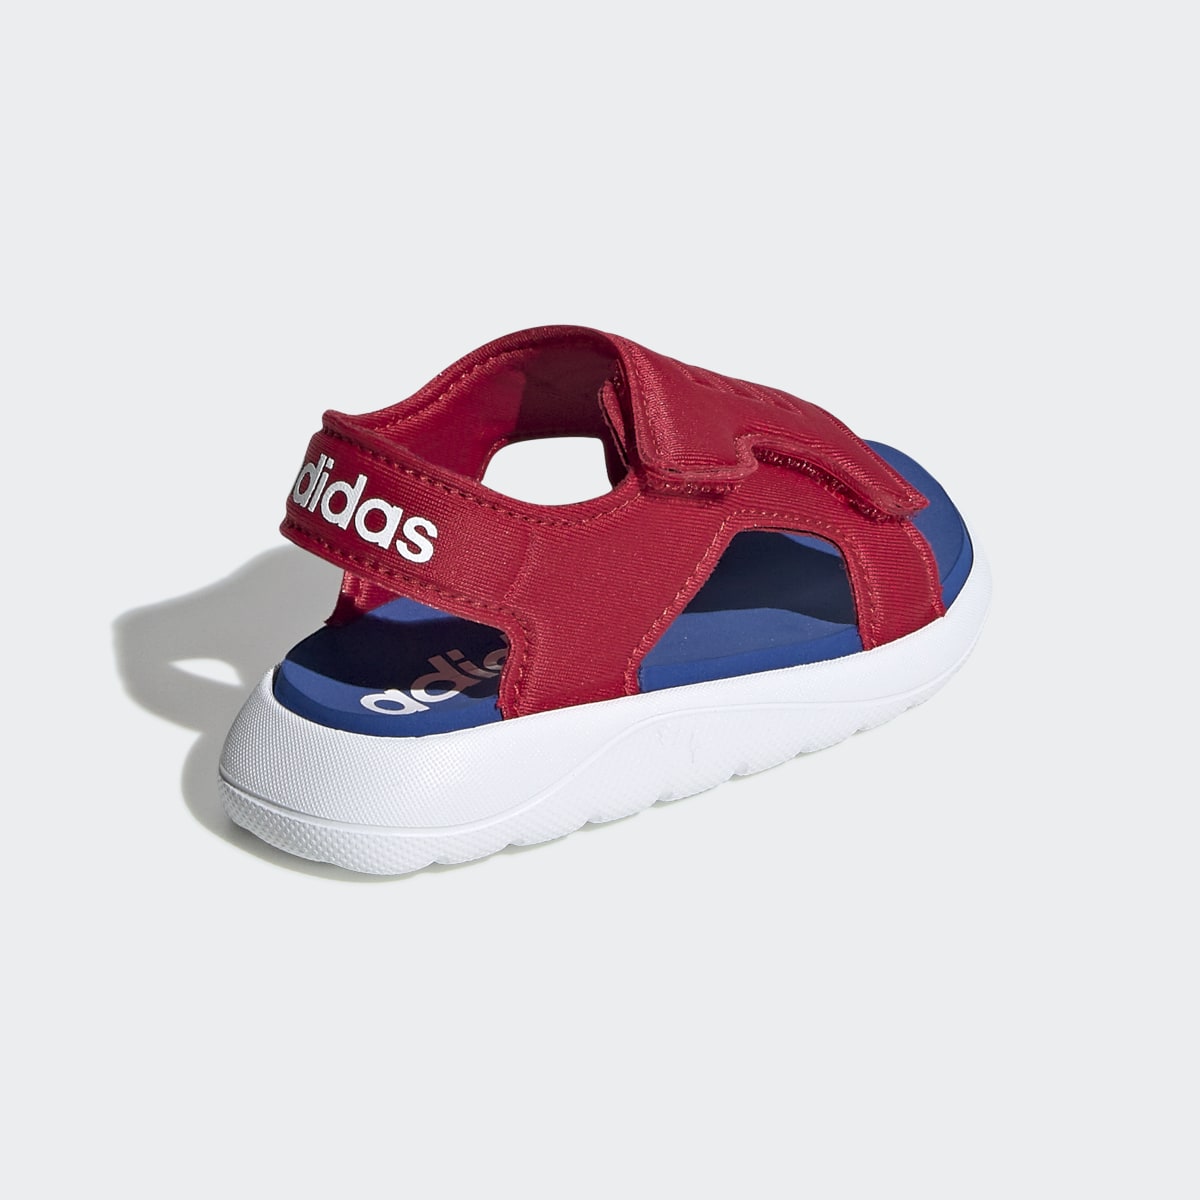 Adidas Comfort Sandals. 6